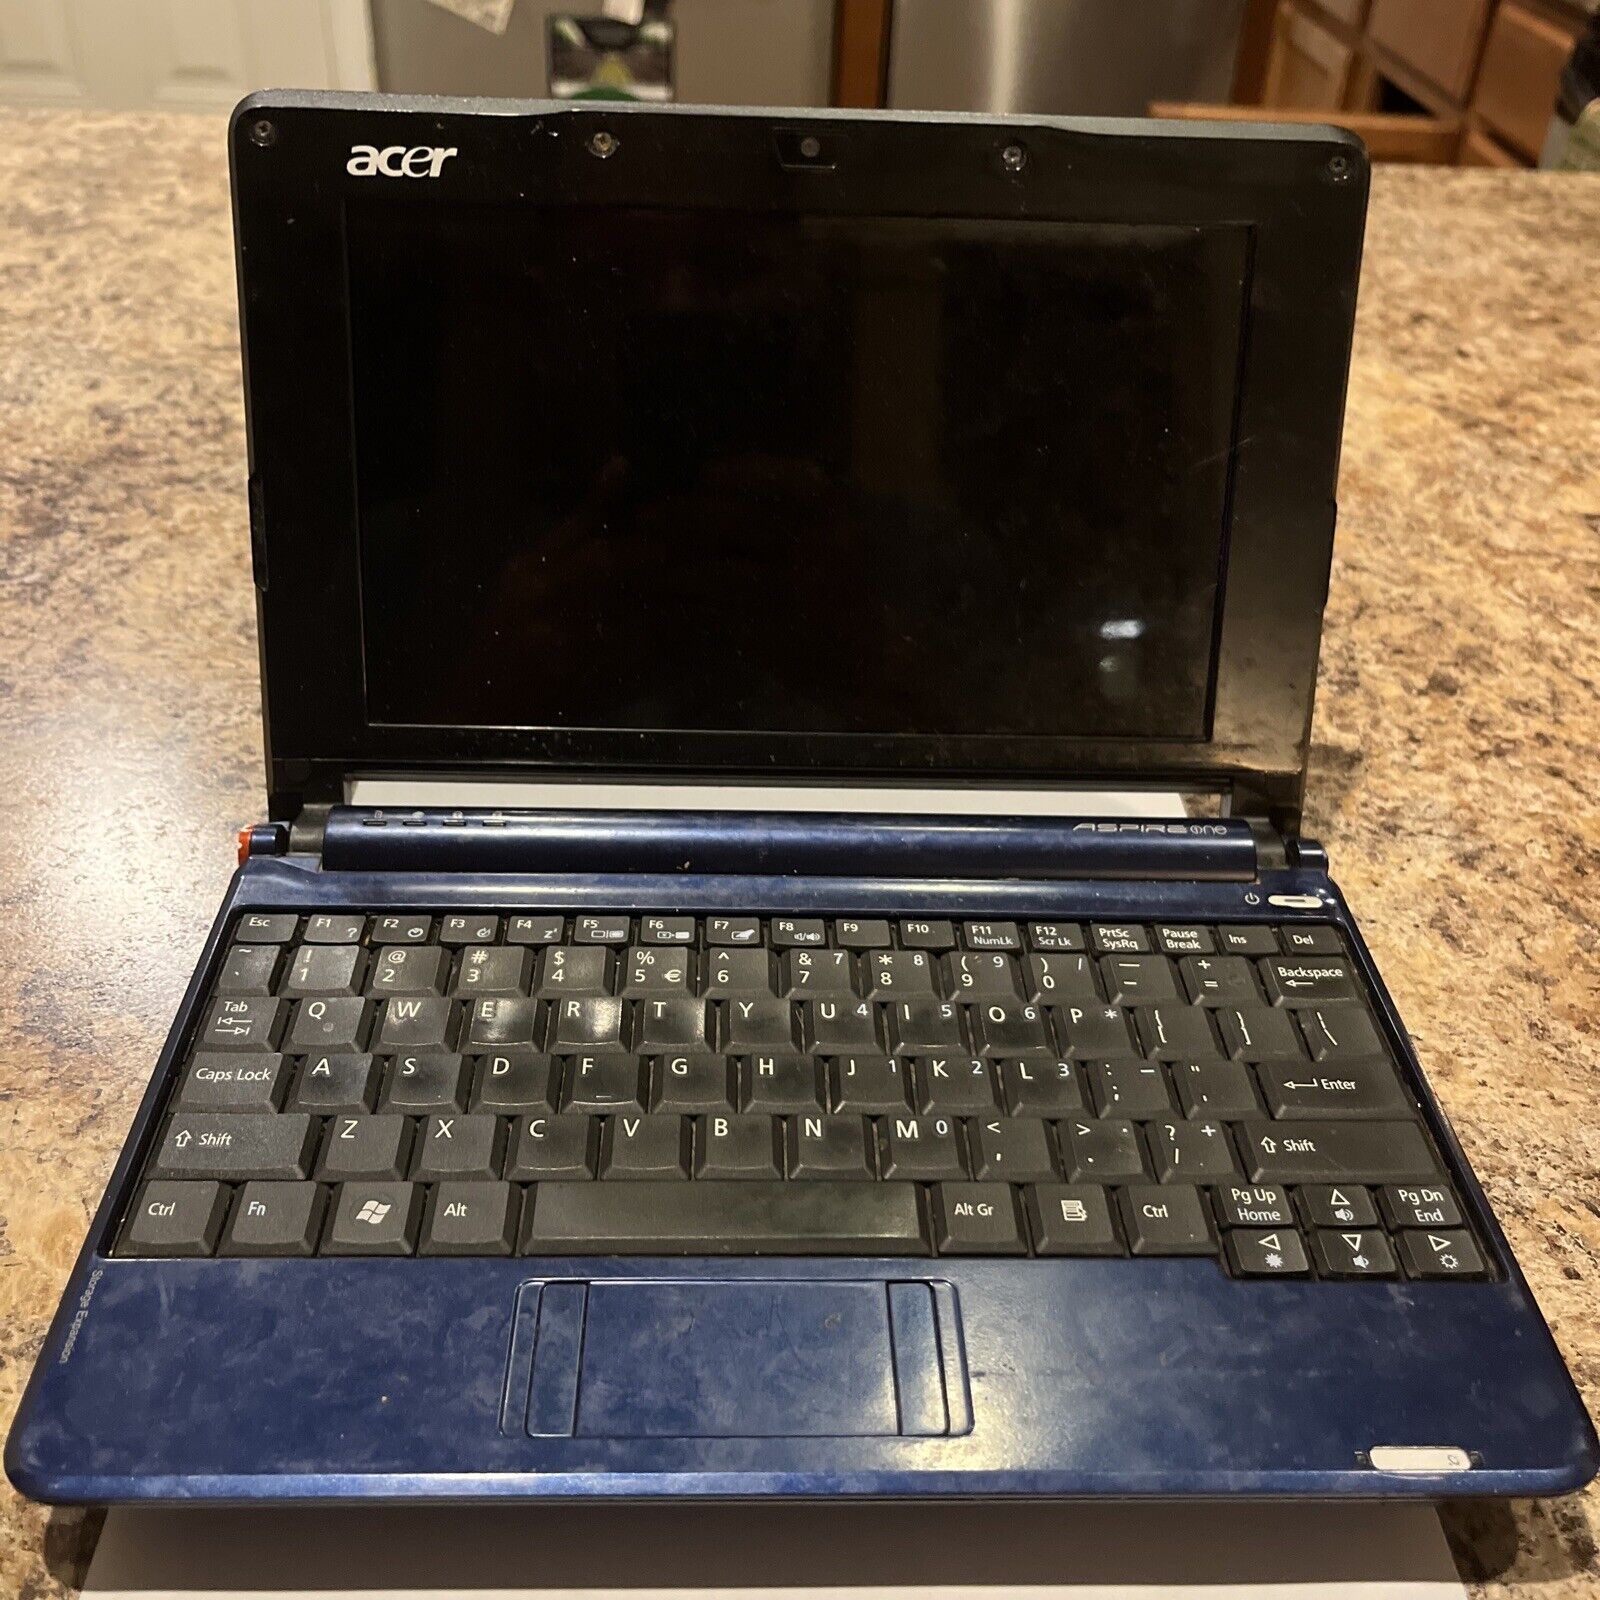 Acer Aspire One Series ZG5 Intel Atom 1.60GHz Netbook Laptop